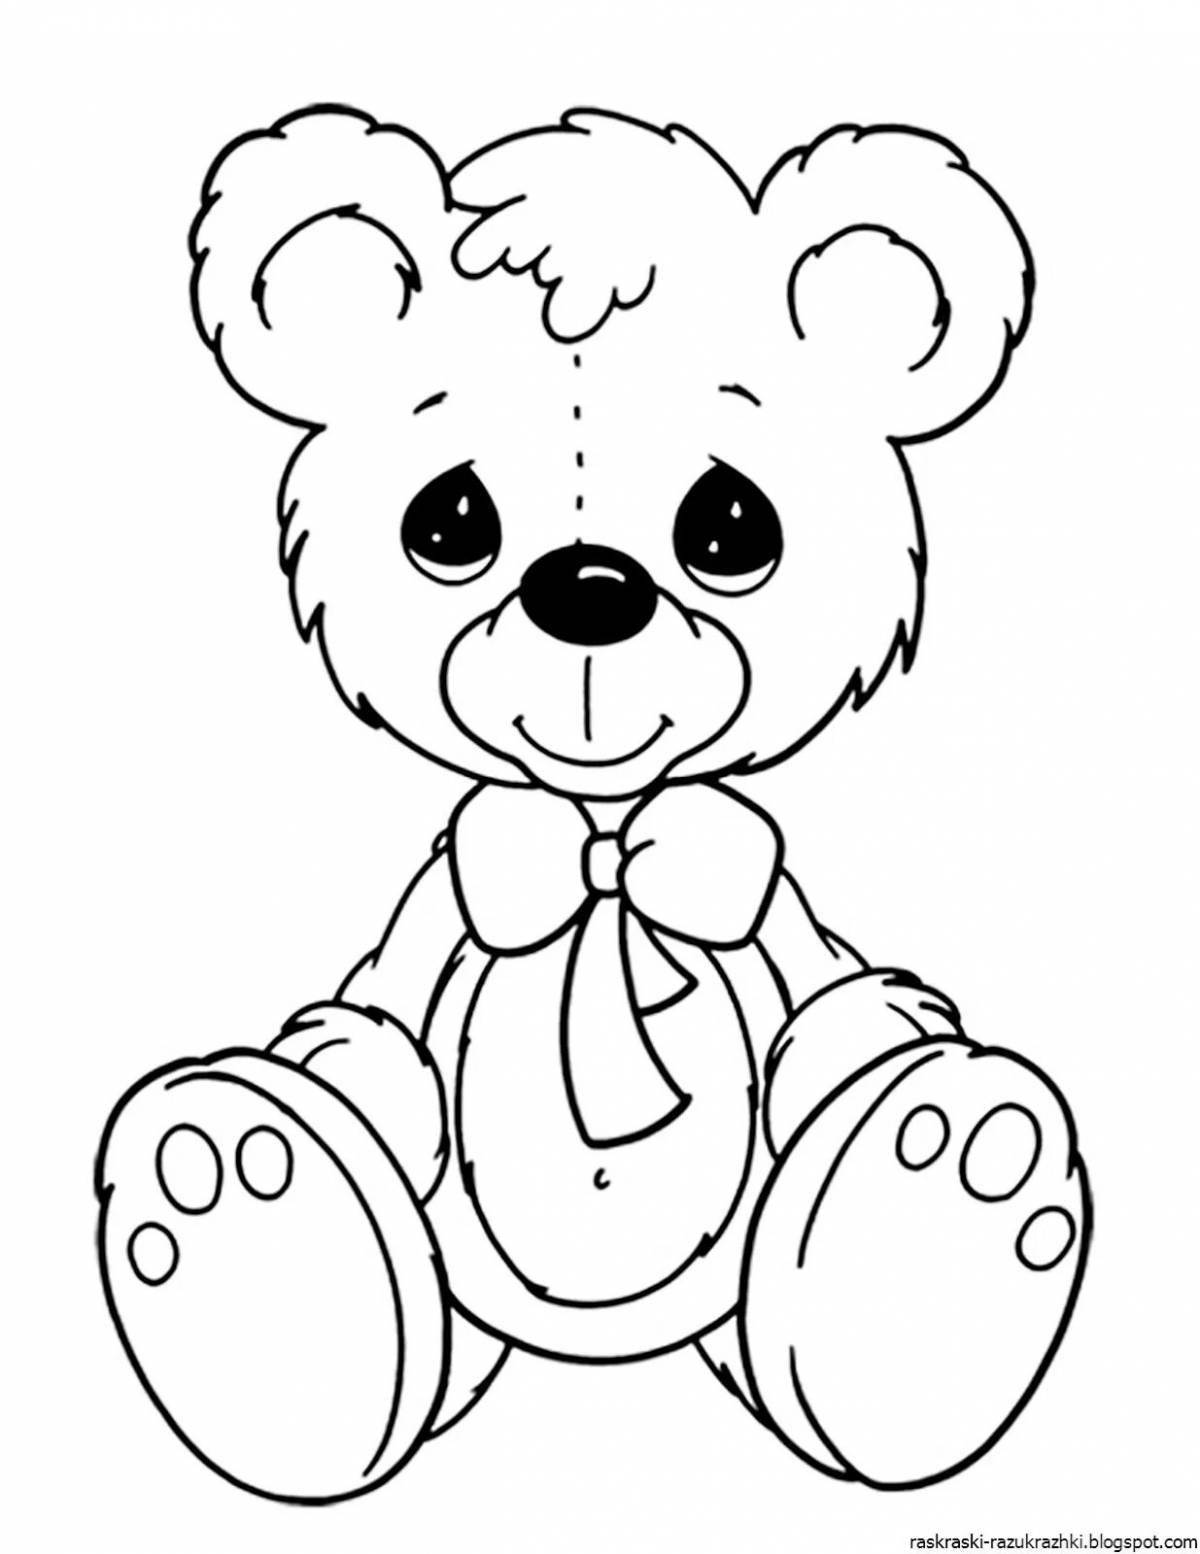 Colouring relaxed teddy bear